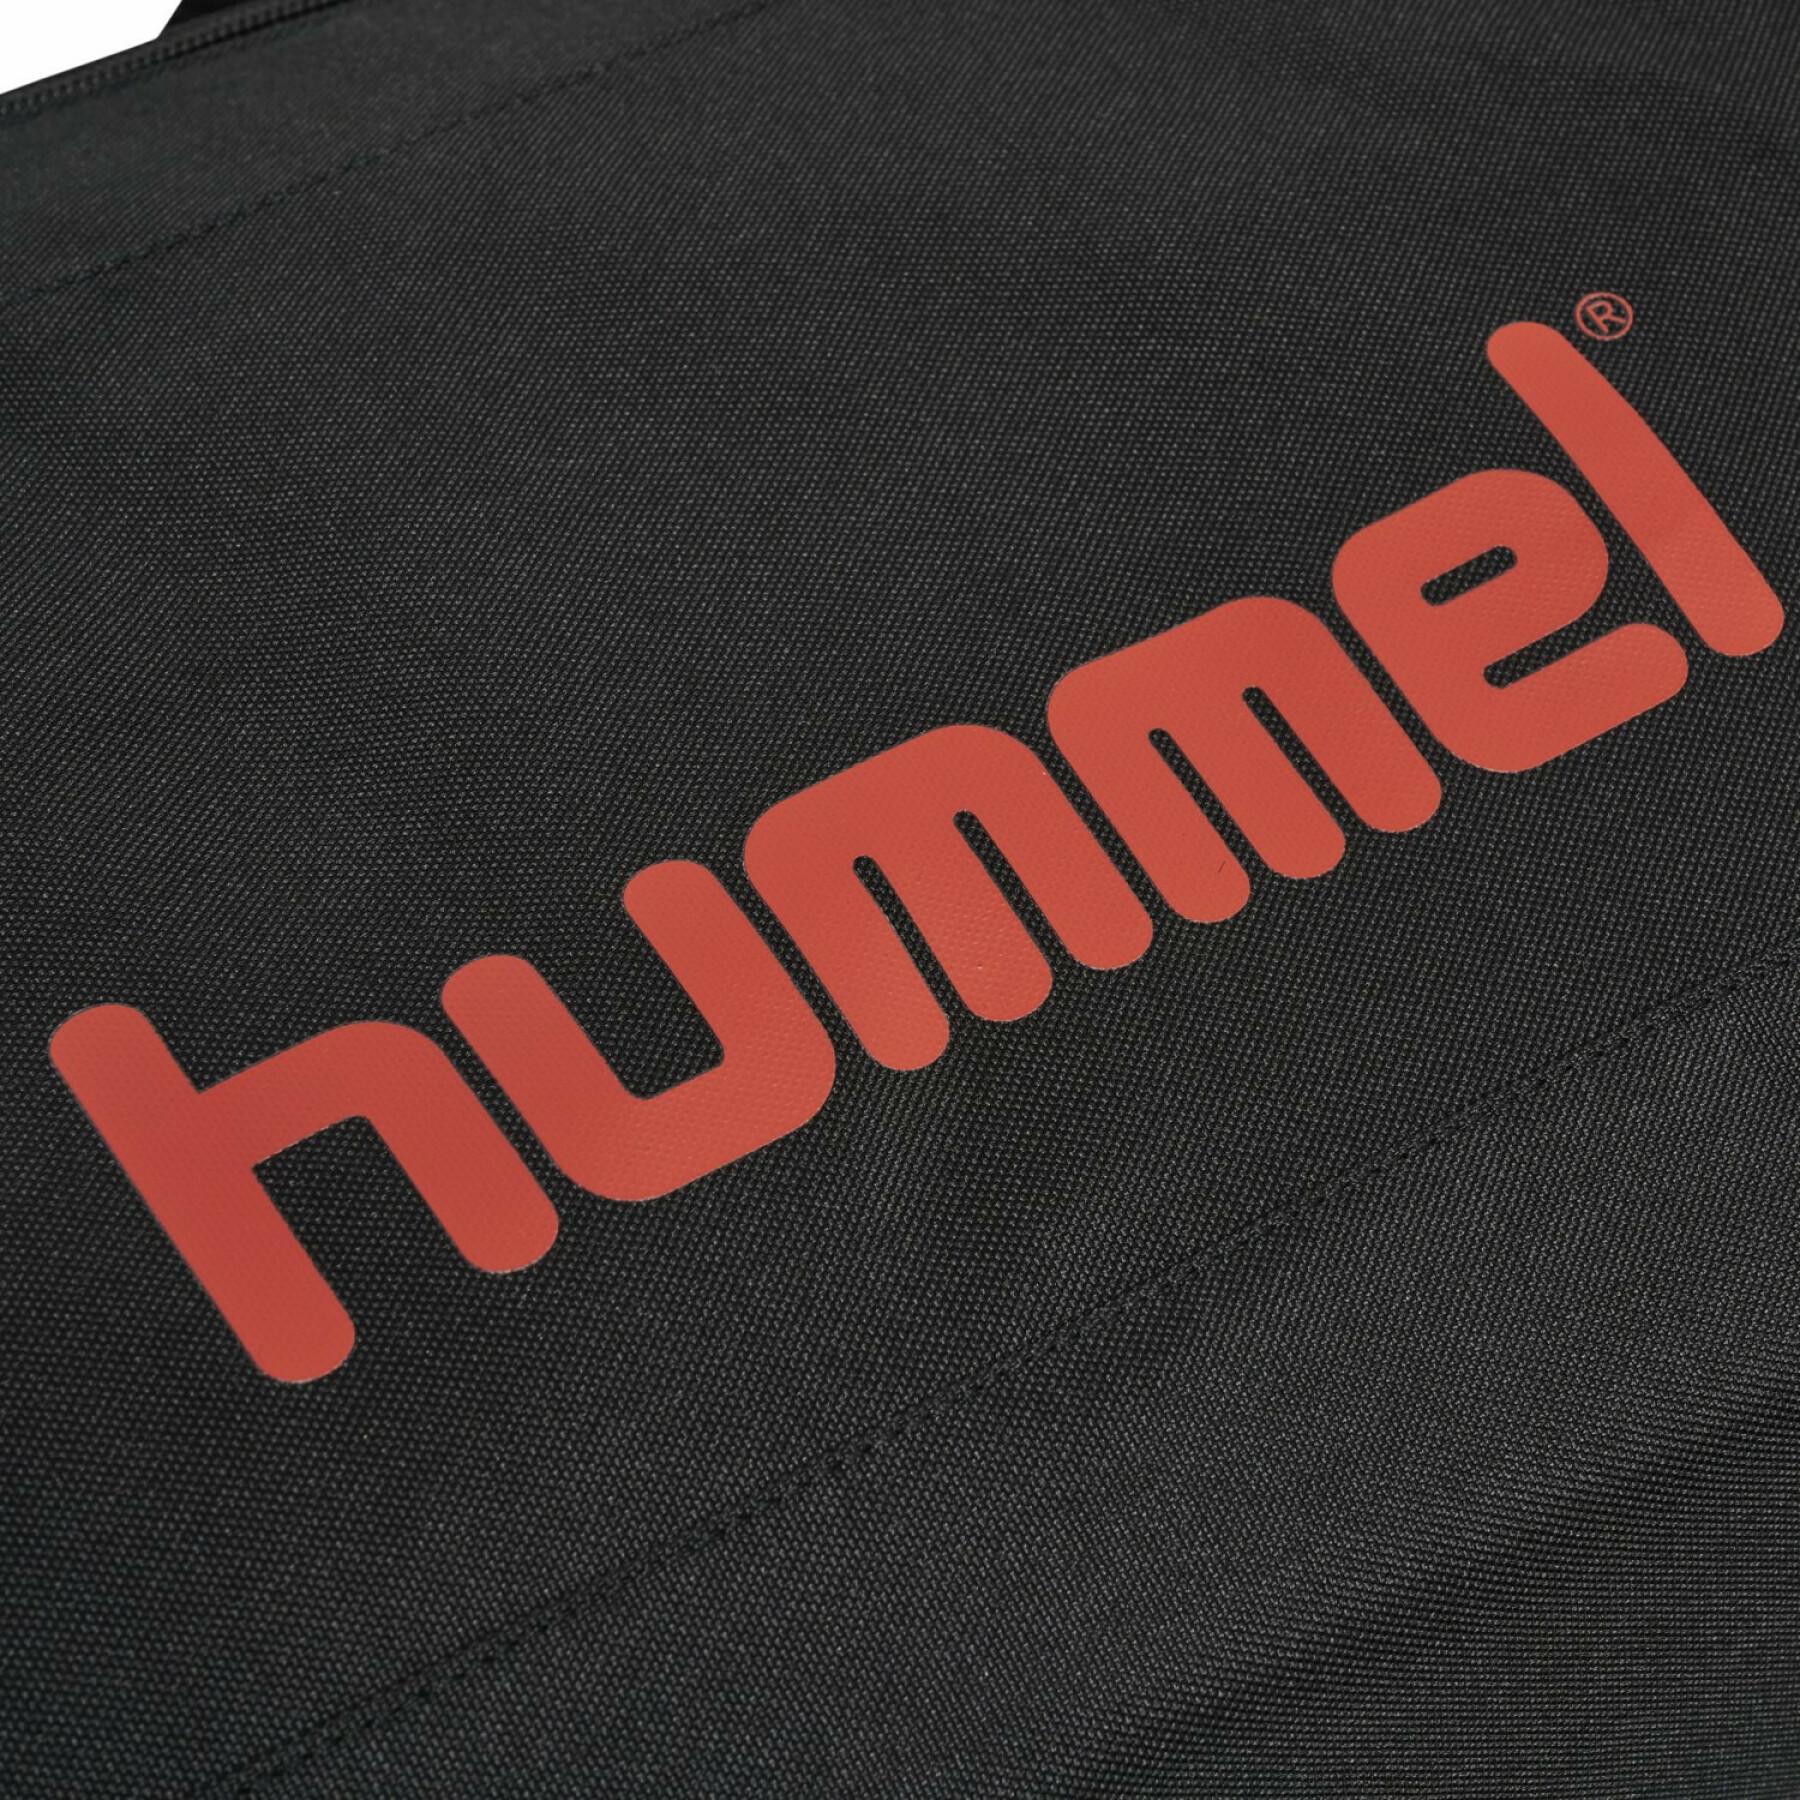 Sports bag Hummel